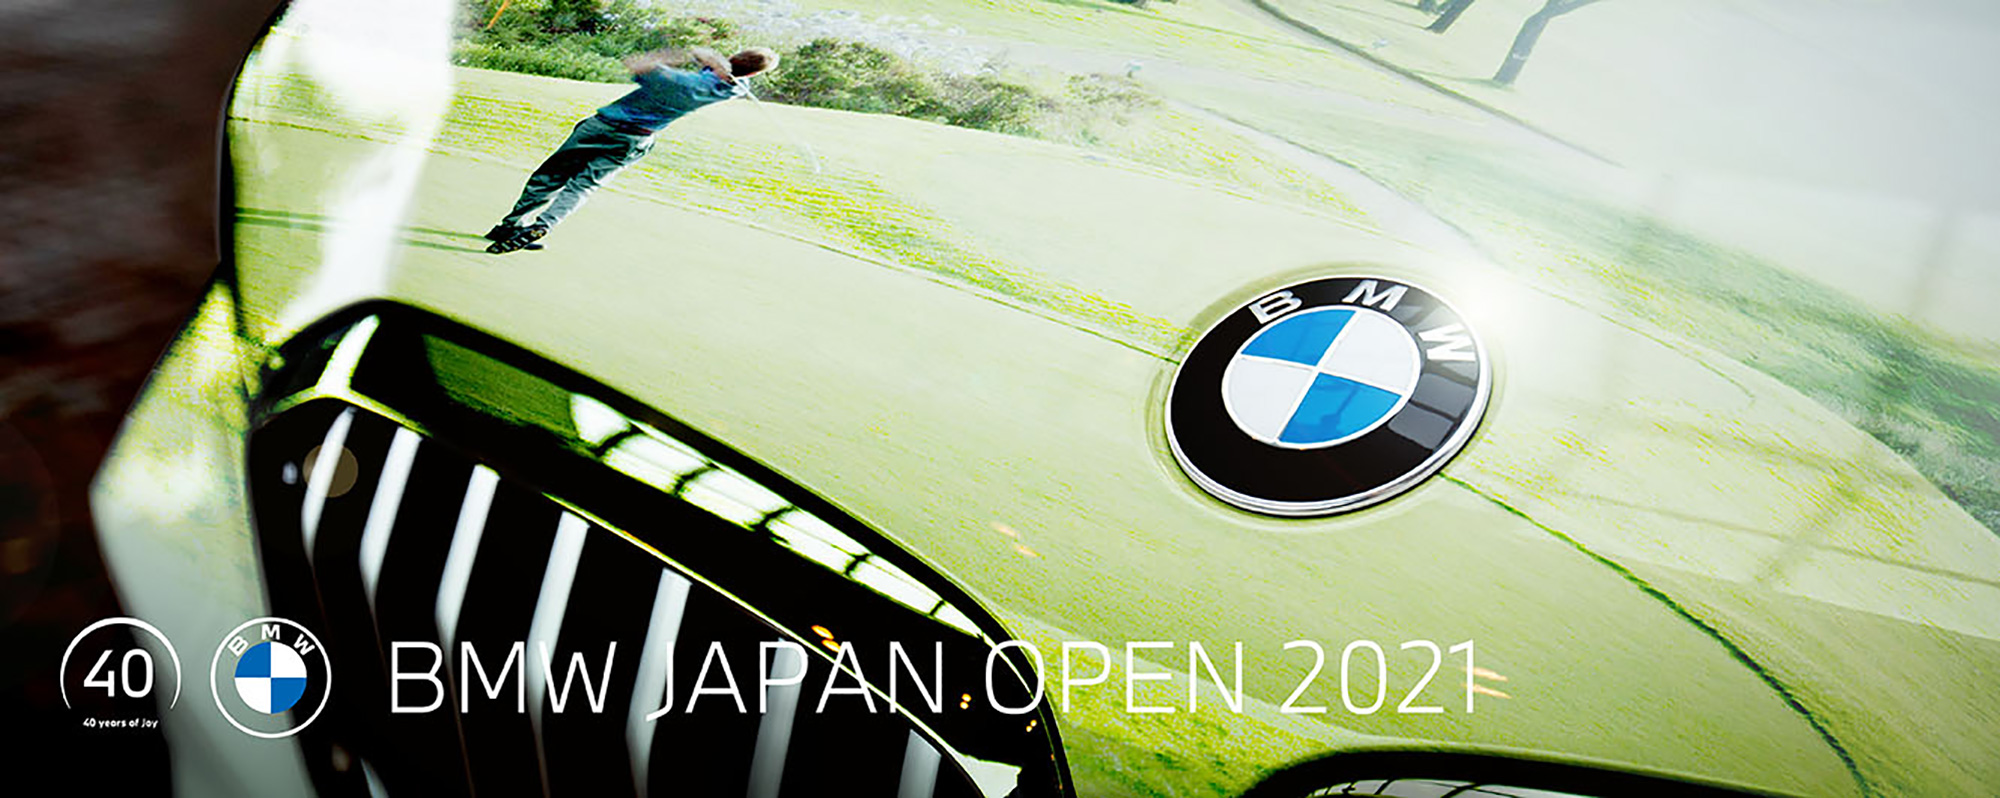 BMW JAPAN OPEN 2021